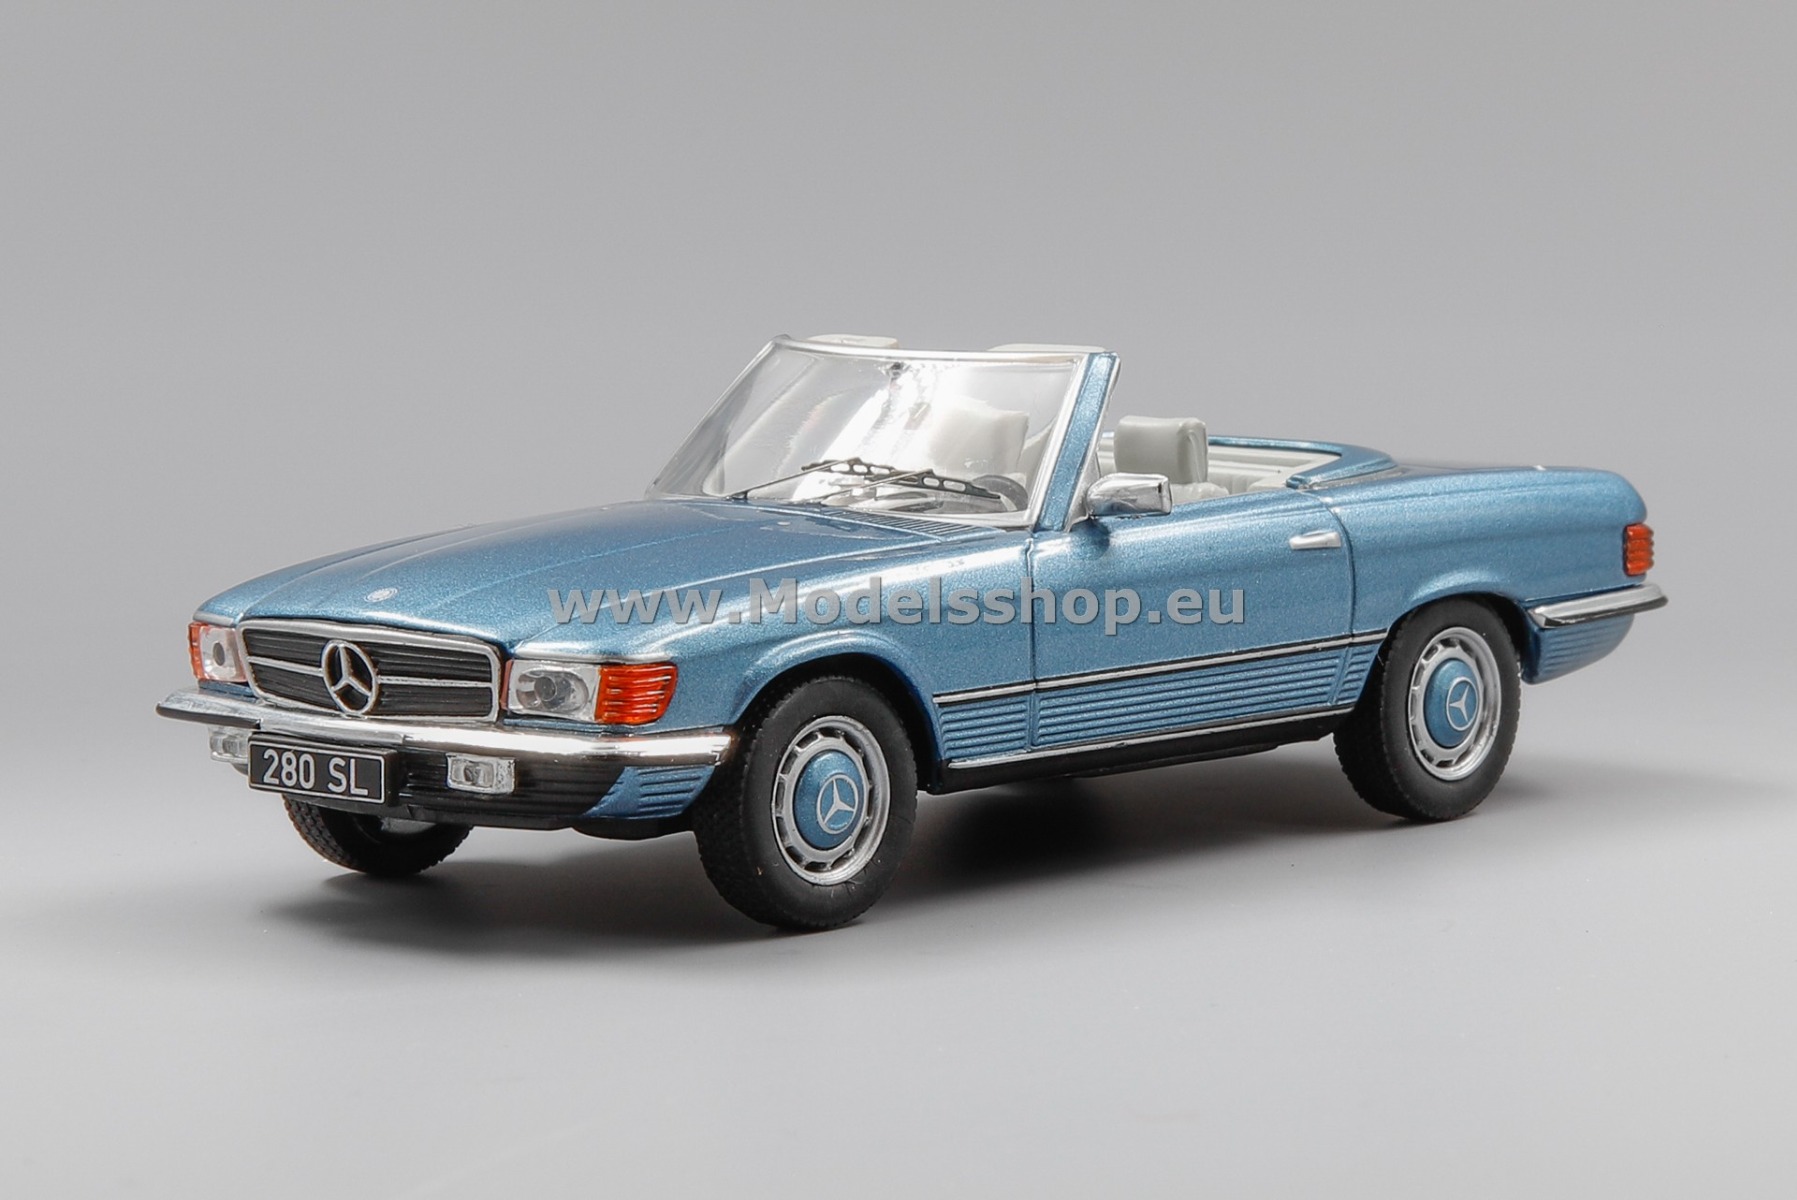 IXOCLC458N.22 Mercedes-Benz 280 SL (R107), 1979 /light blue metallic/